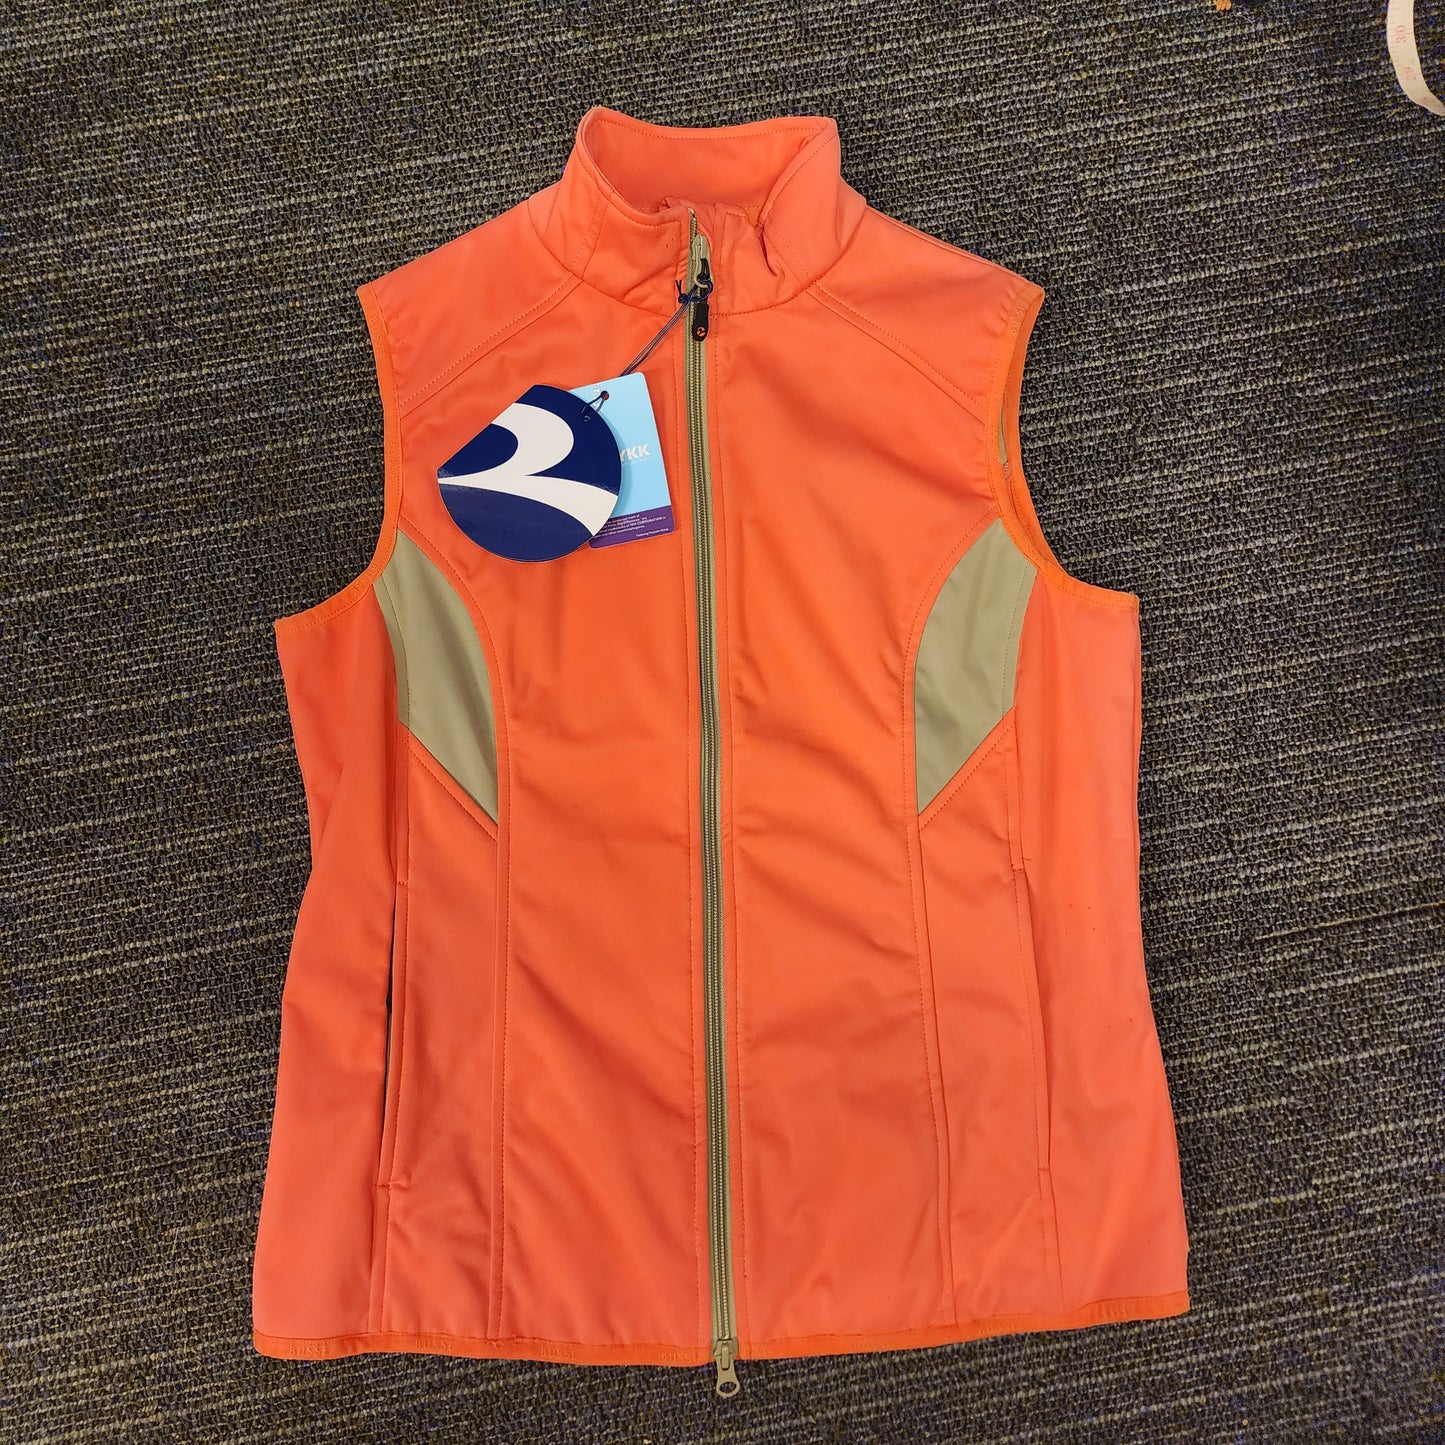 Busse orange softshell vest - brand new